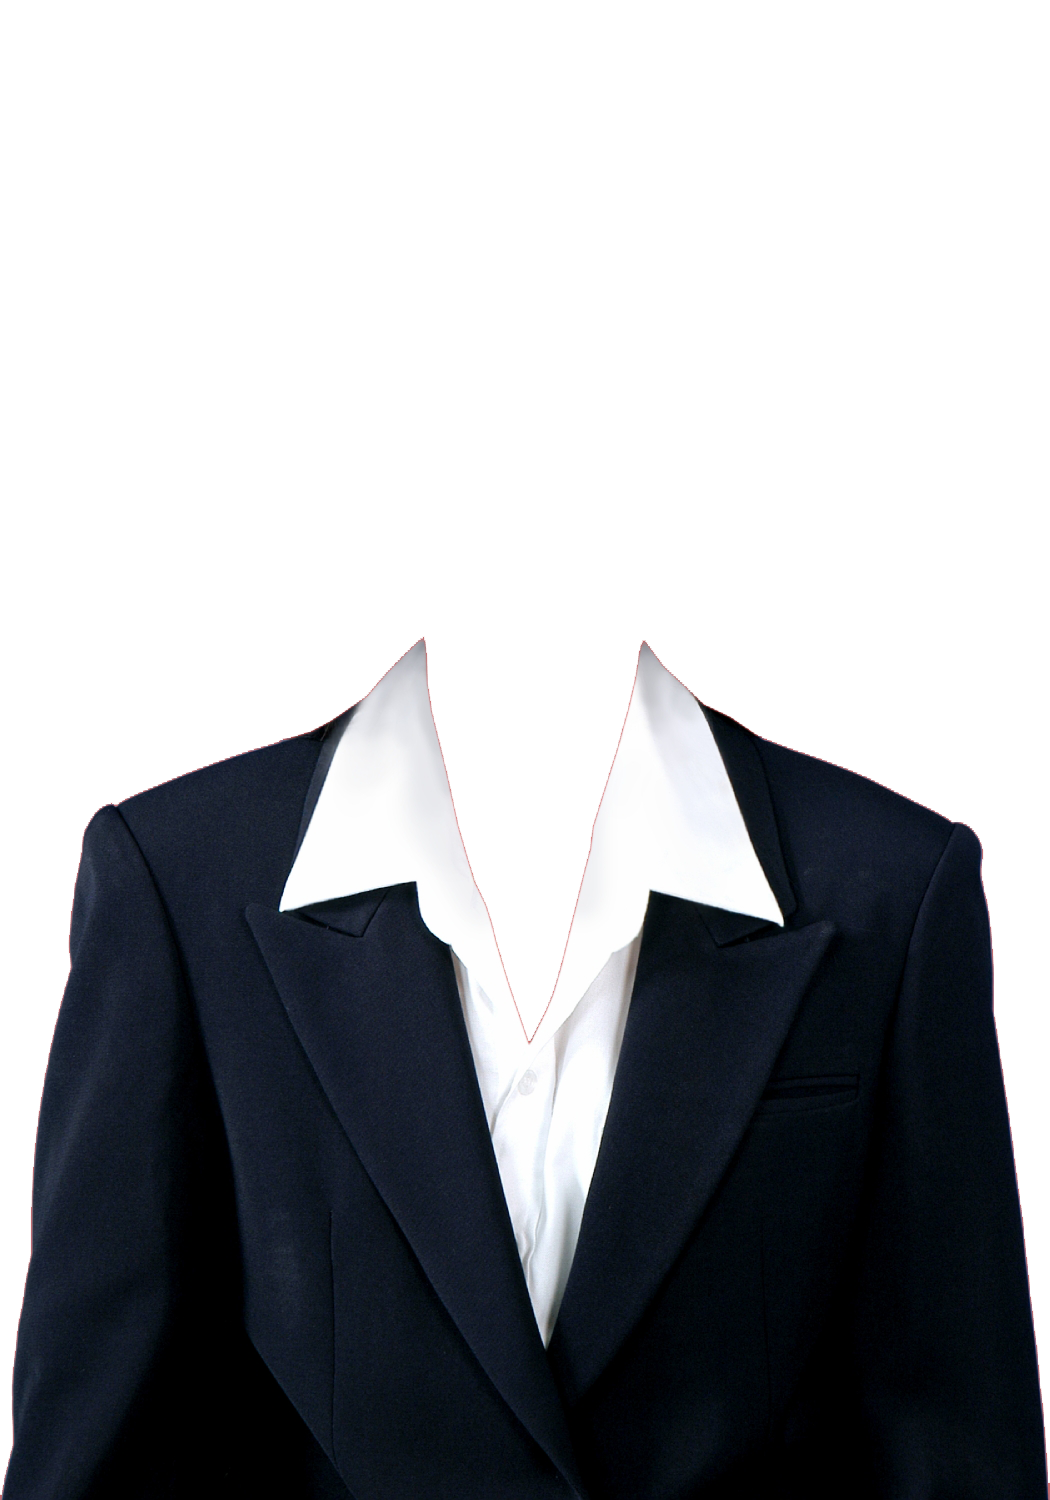 Suit Woman Formal wear - dress shirt png download - 1050*1500 - Free  Transparent Suit png Download. - Clip Art Library